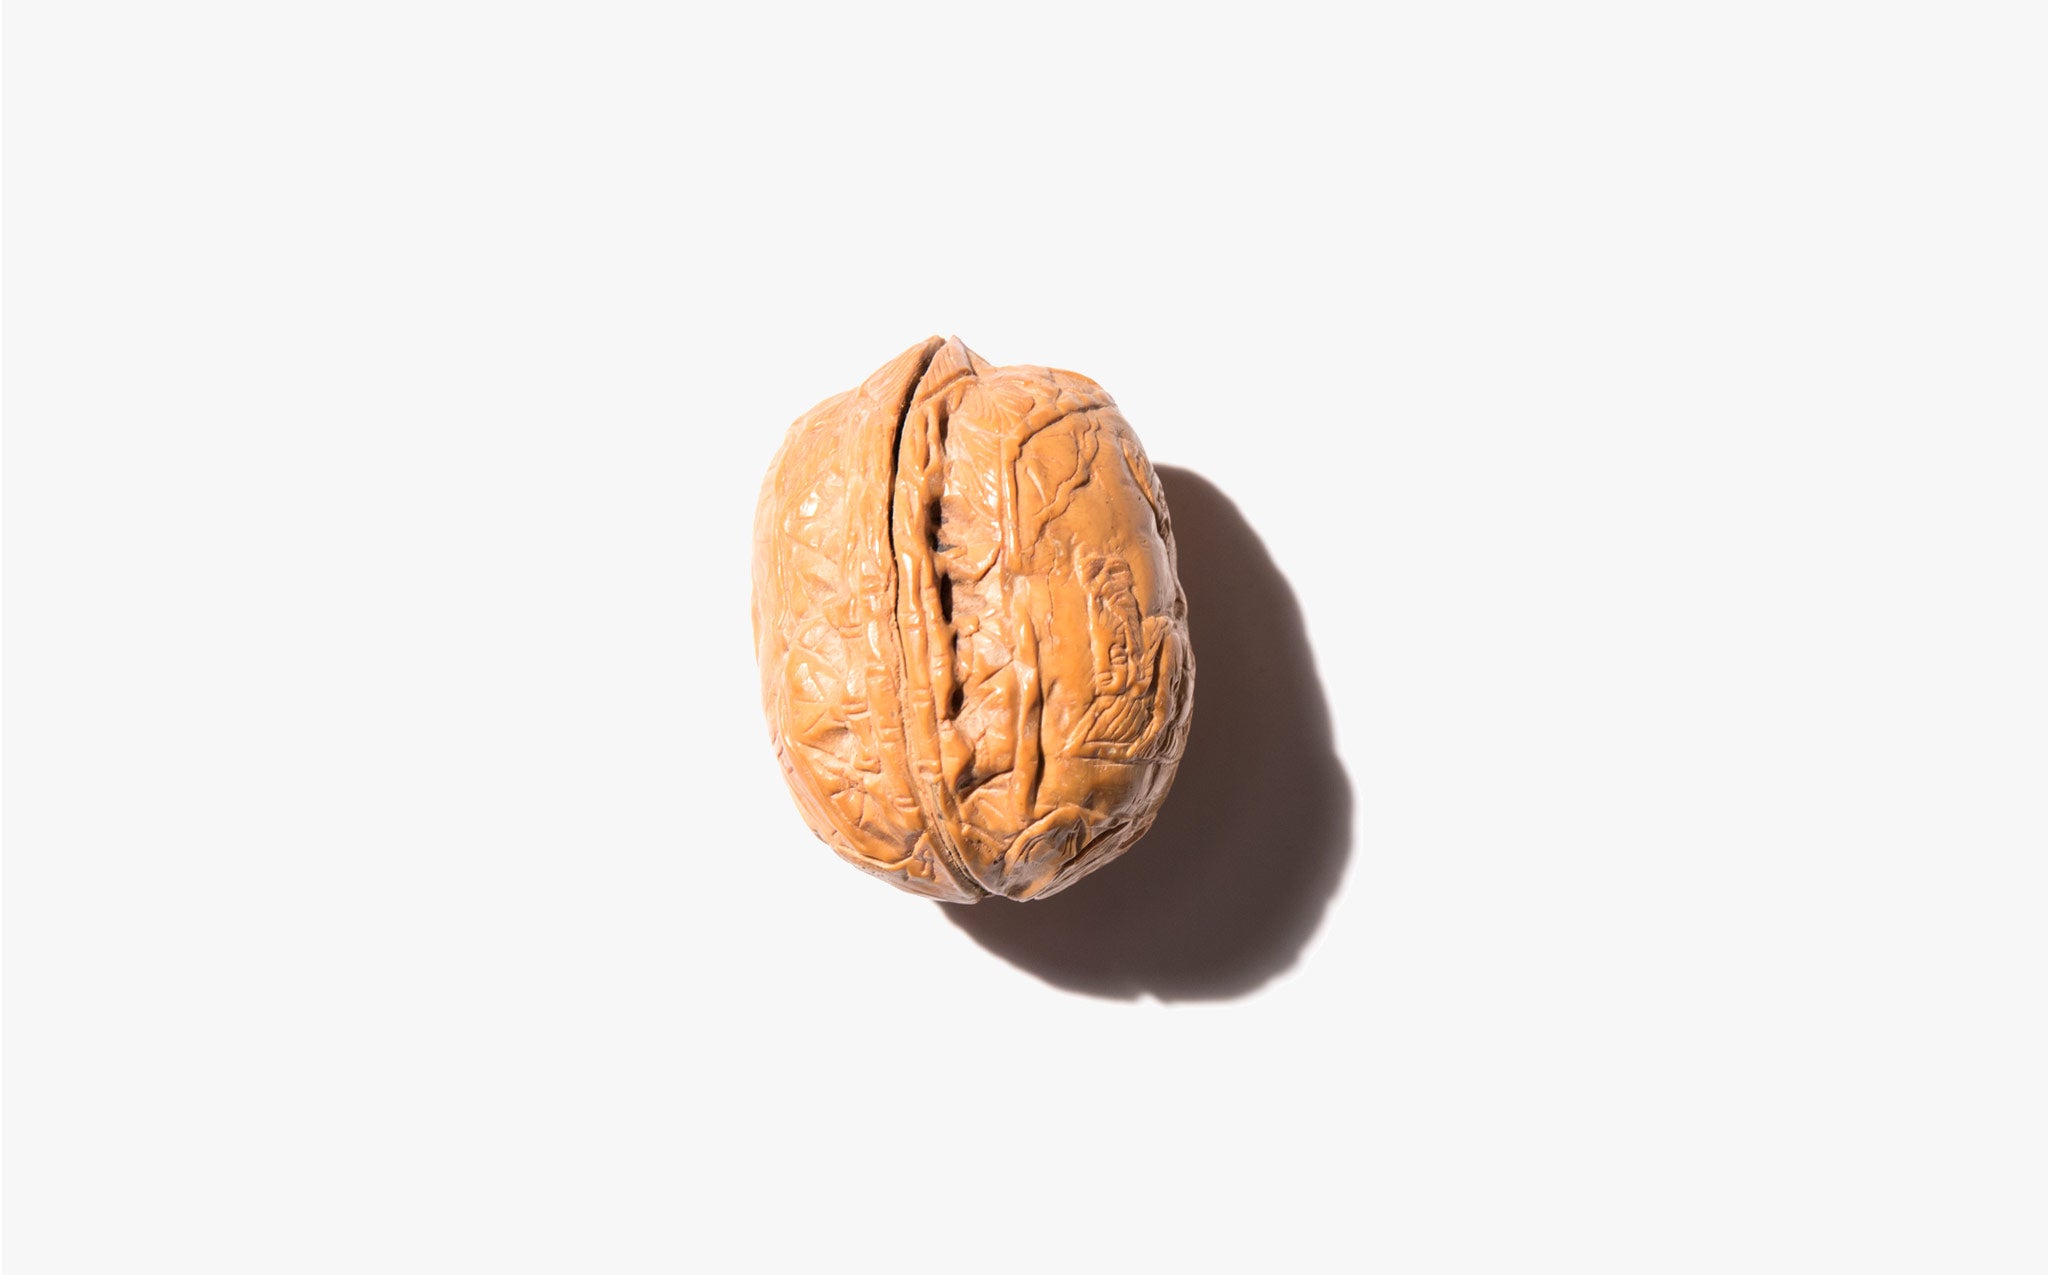 The Busta-Nut